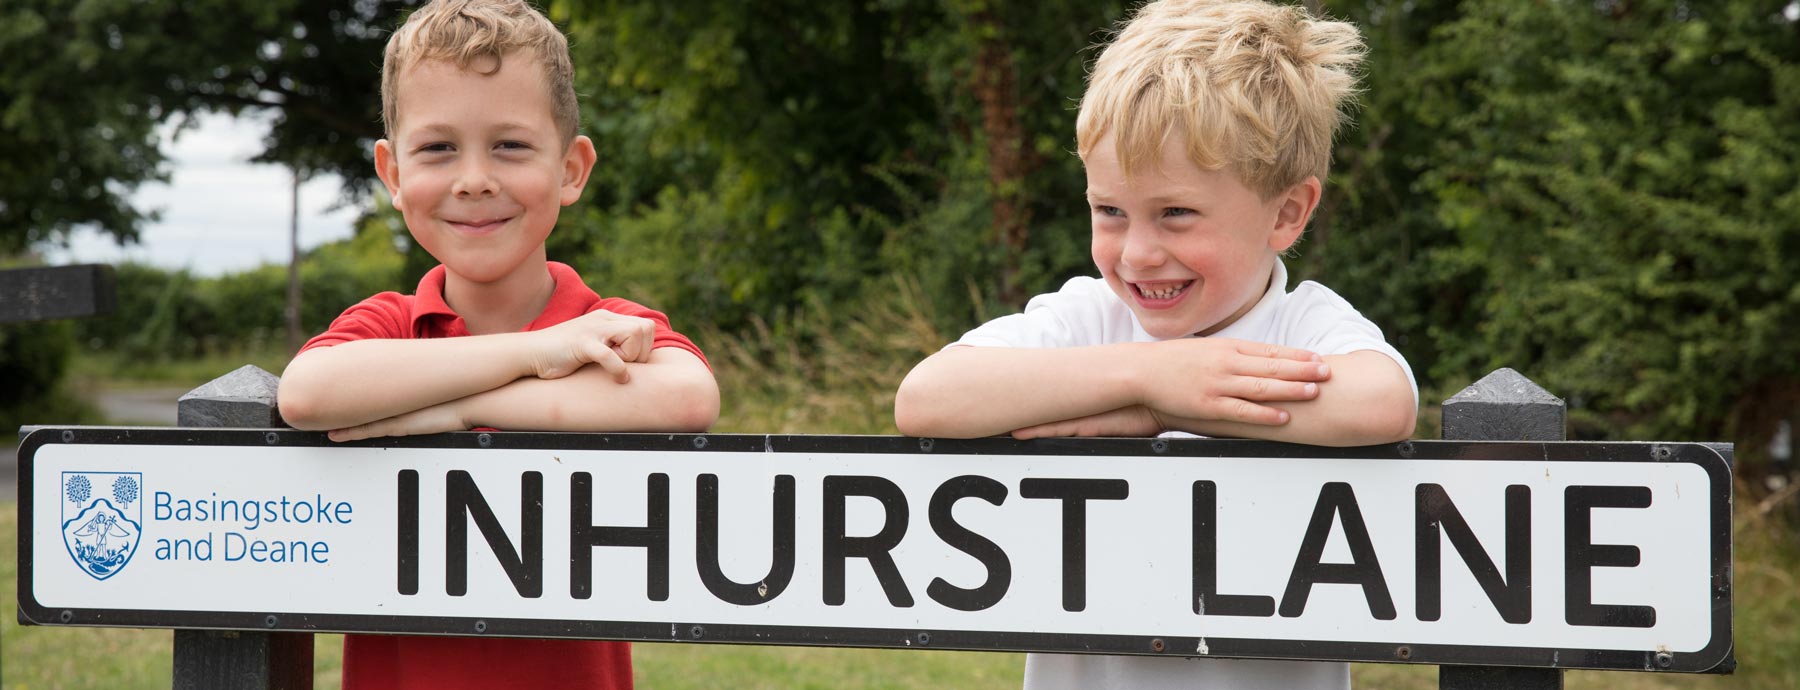 Two smiling children behind the road sign for Inhurst Lane (Grantham Farm Montessori School)